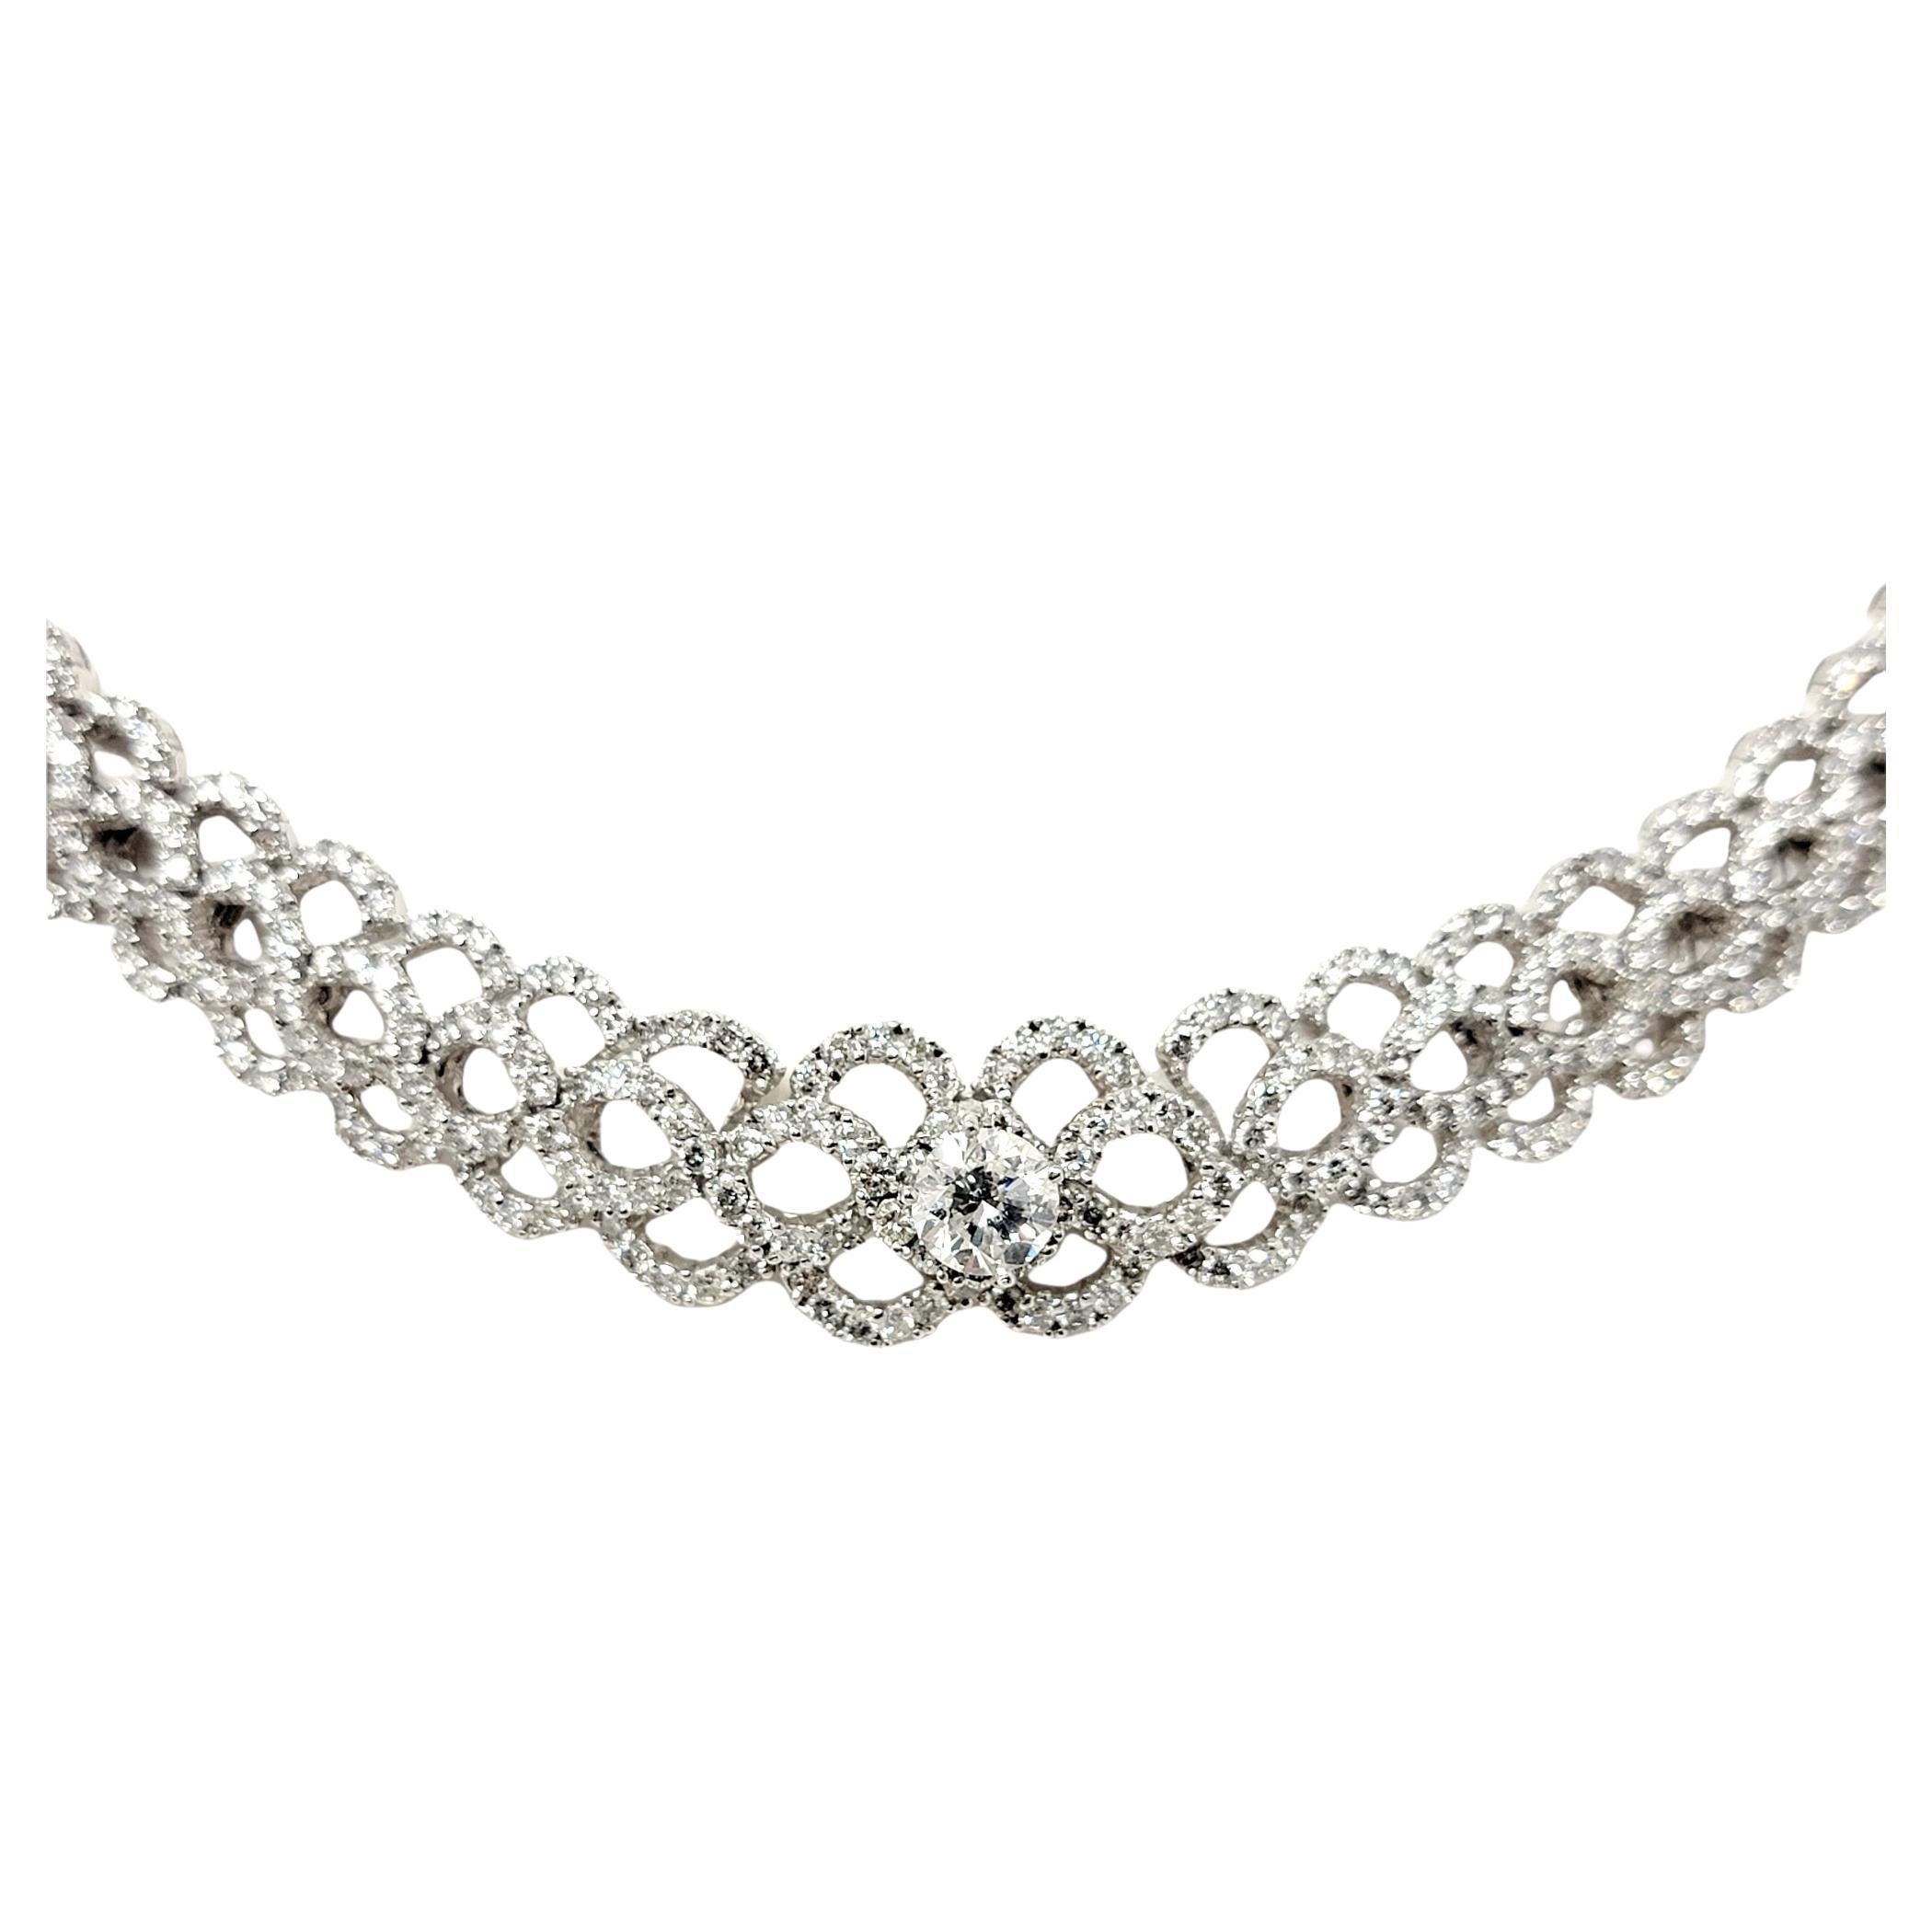 12.34 Carat Total Round Diamond Woven Braid Collar Necklace 14 Karat White Gold